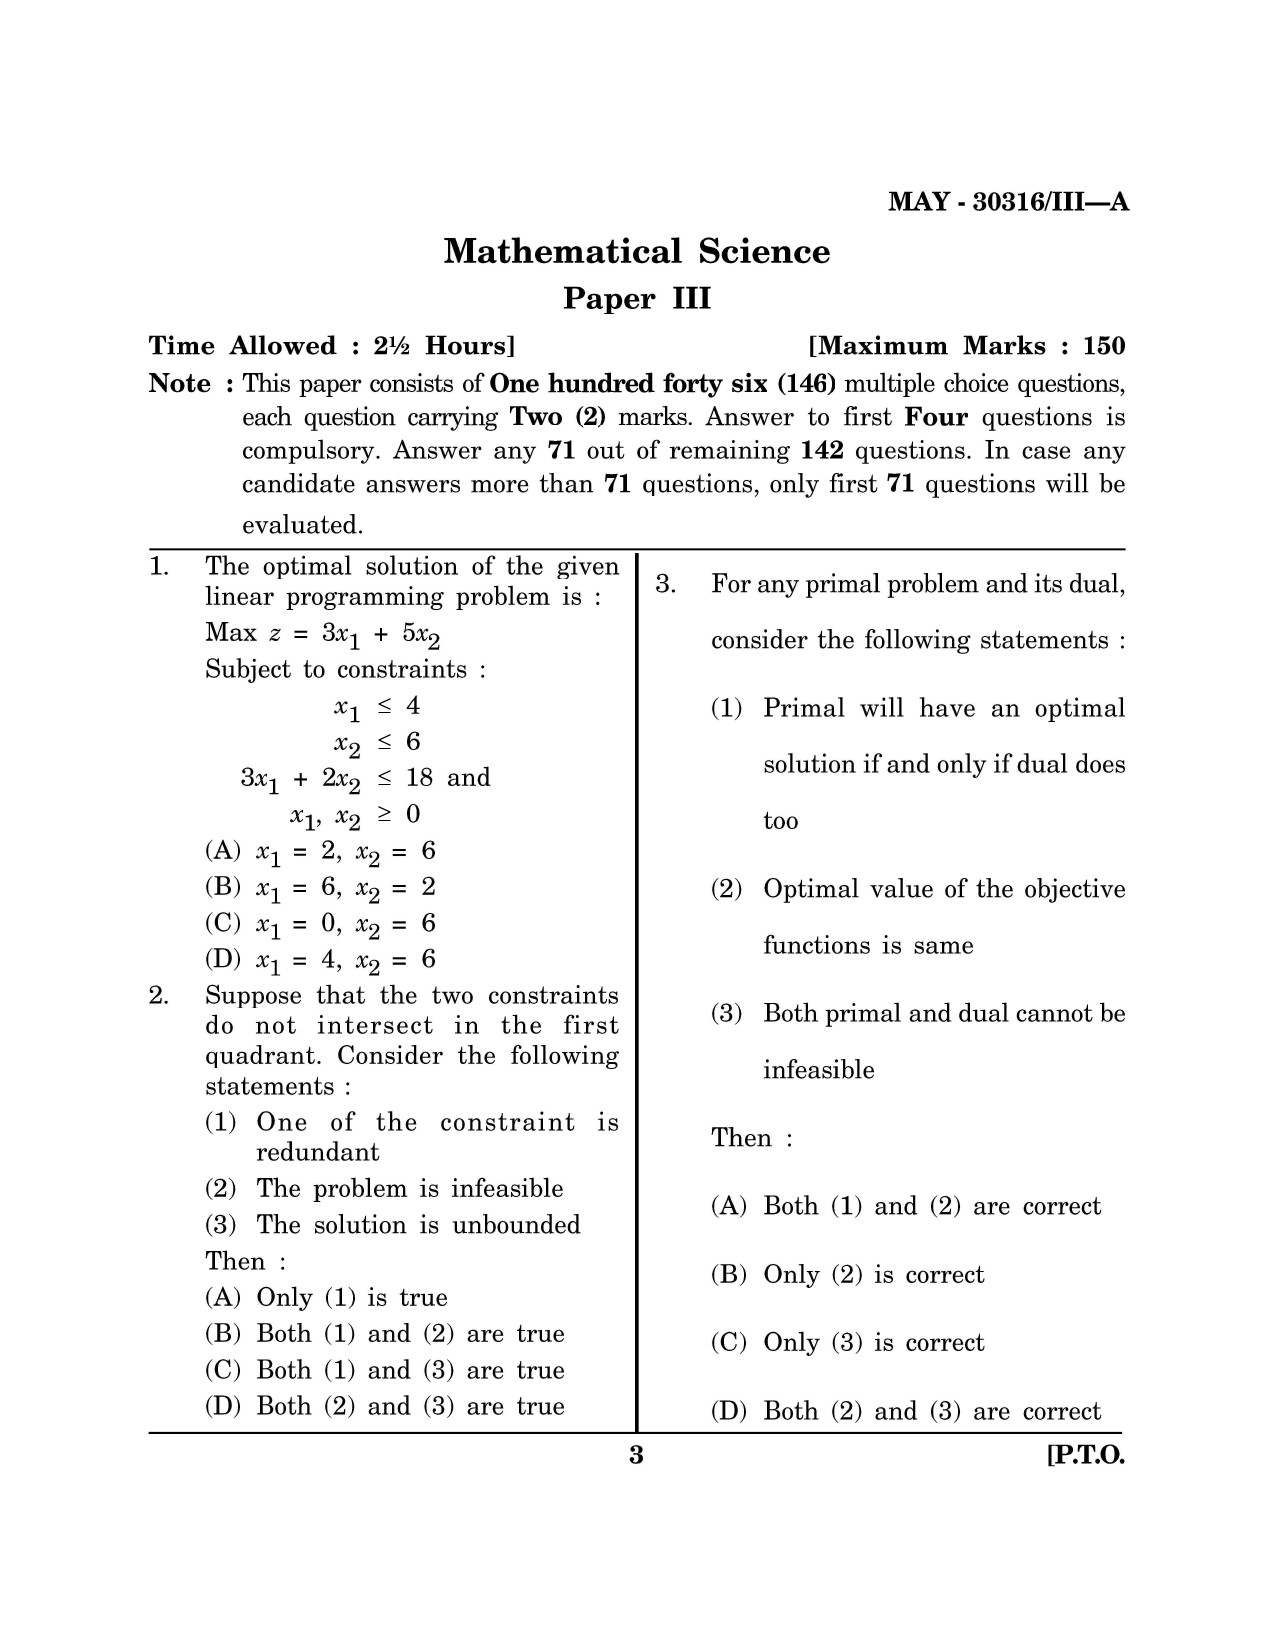 Maharashtra SET Mathematical Sciences Question Paper III May 2016 2